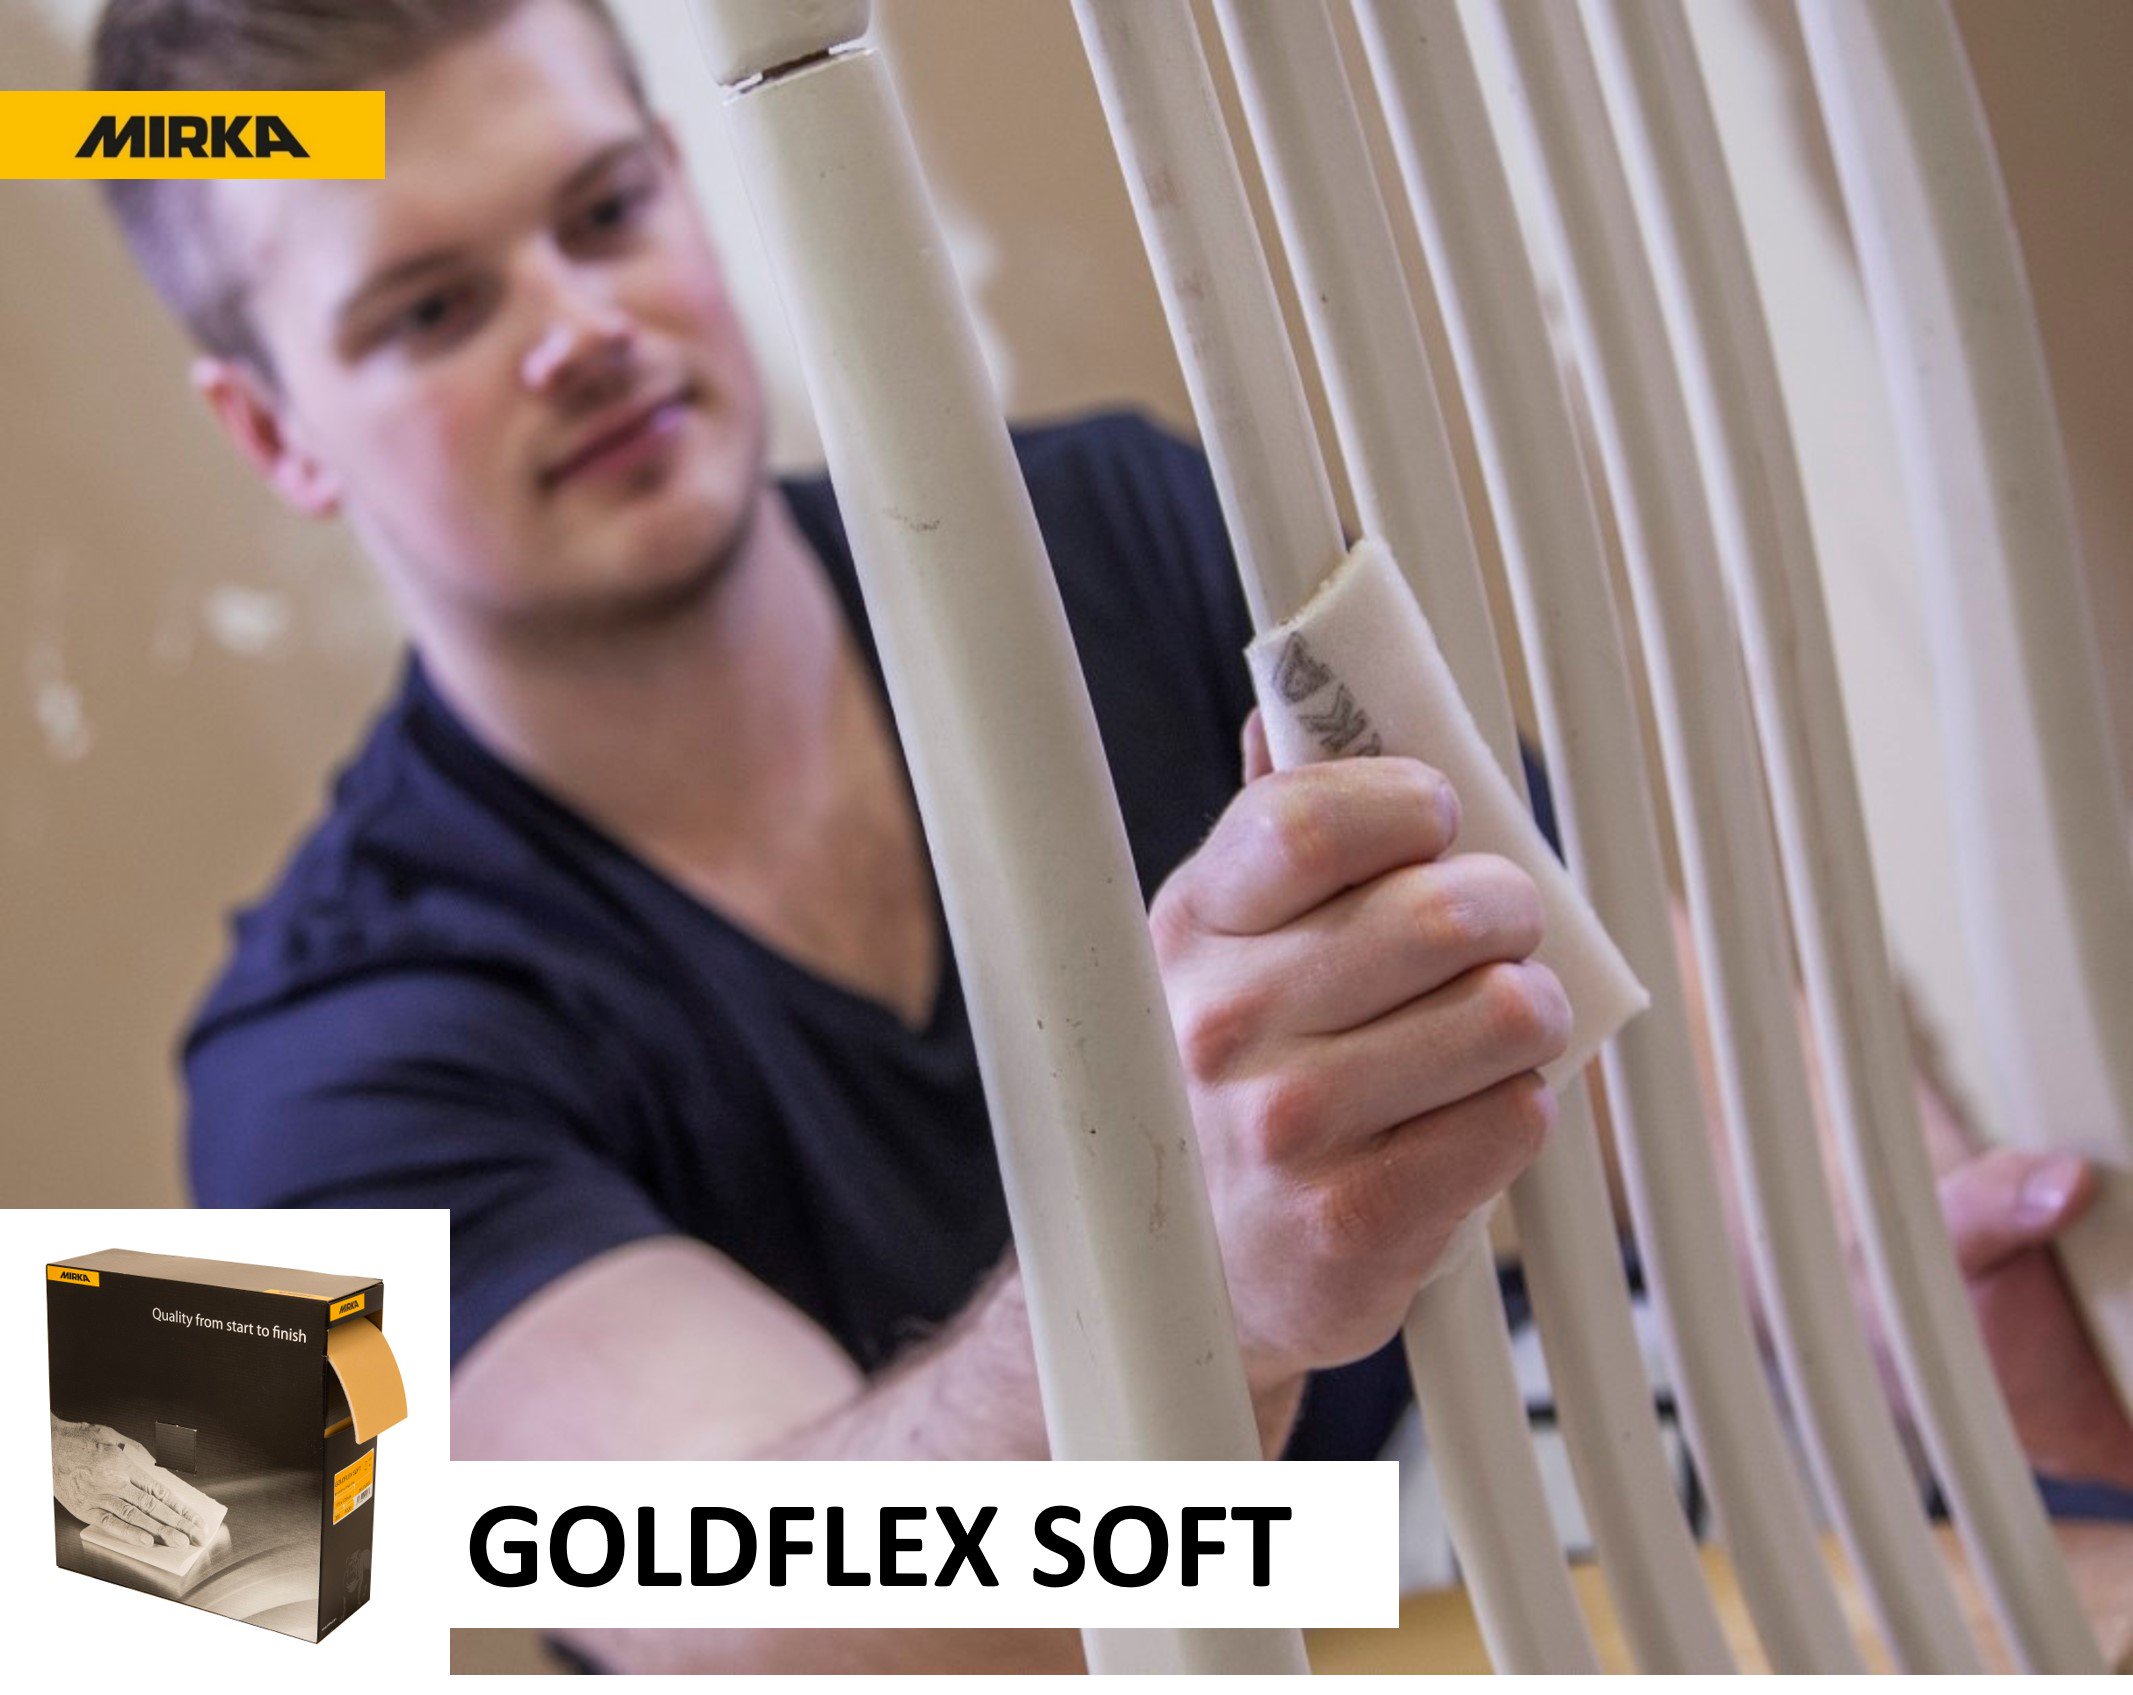 Goldflex Soft Abrasive Pads - Mirka - Ardec - Finishing Products